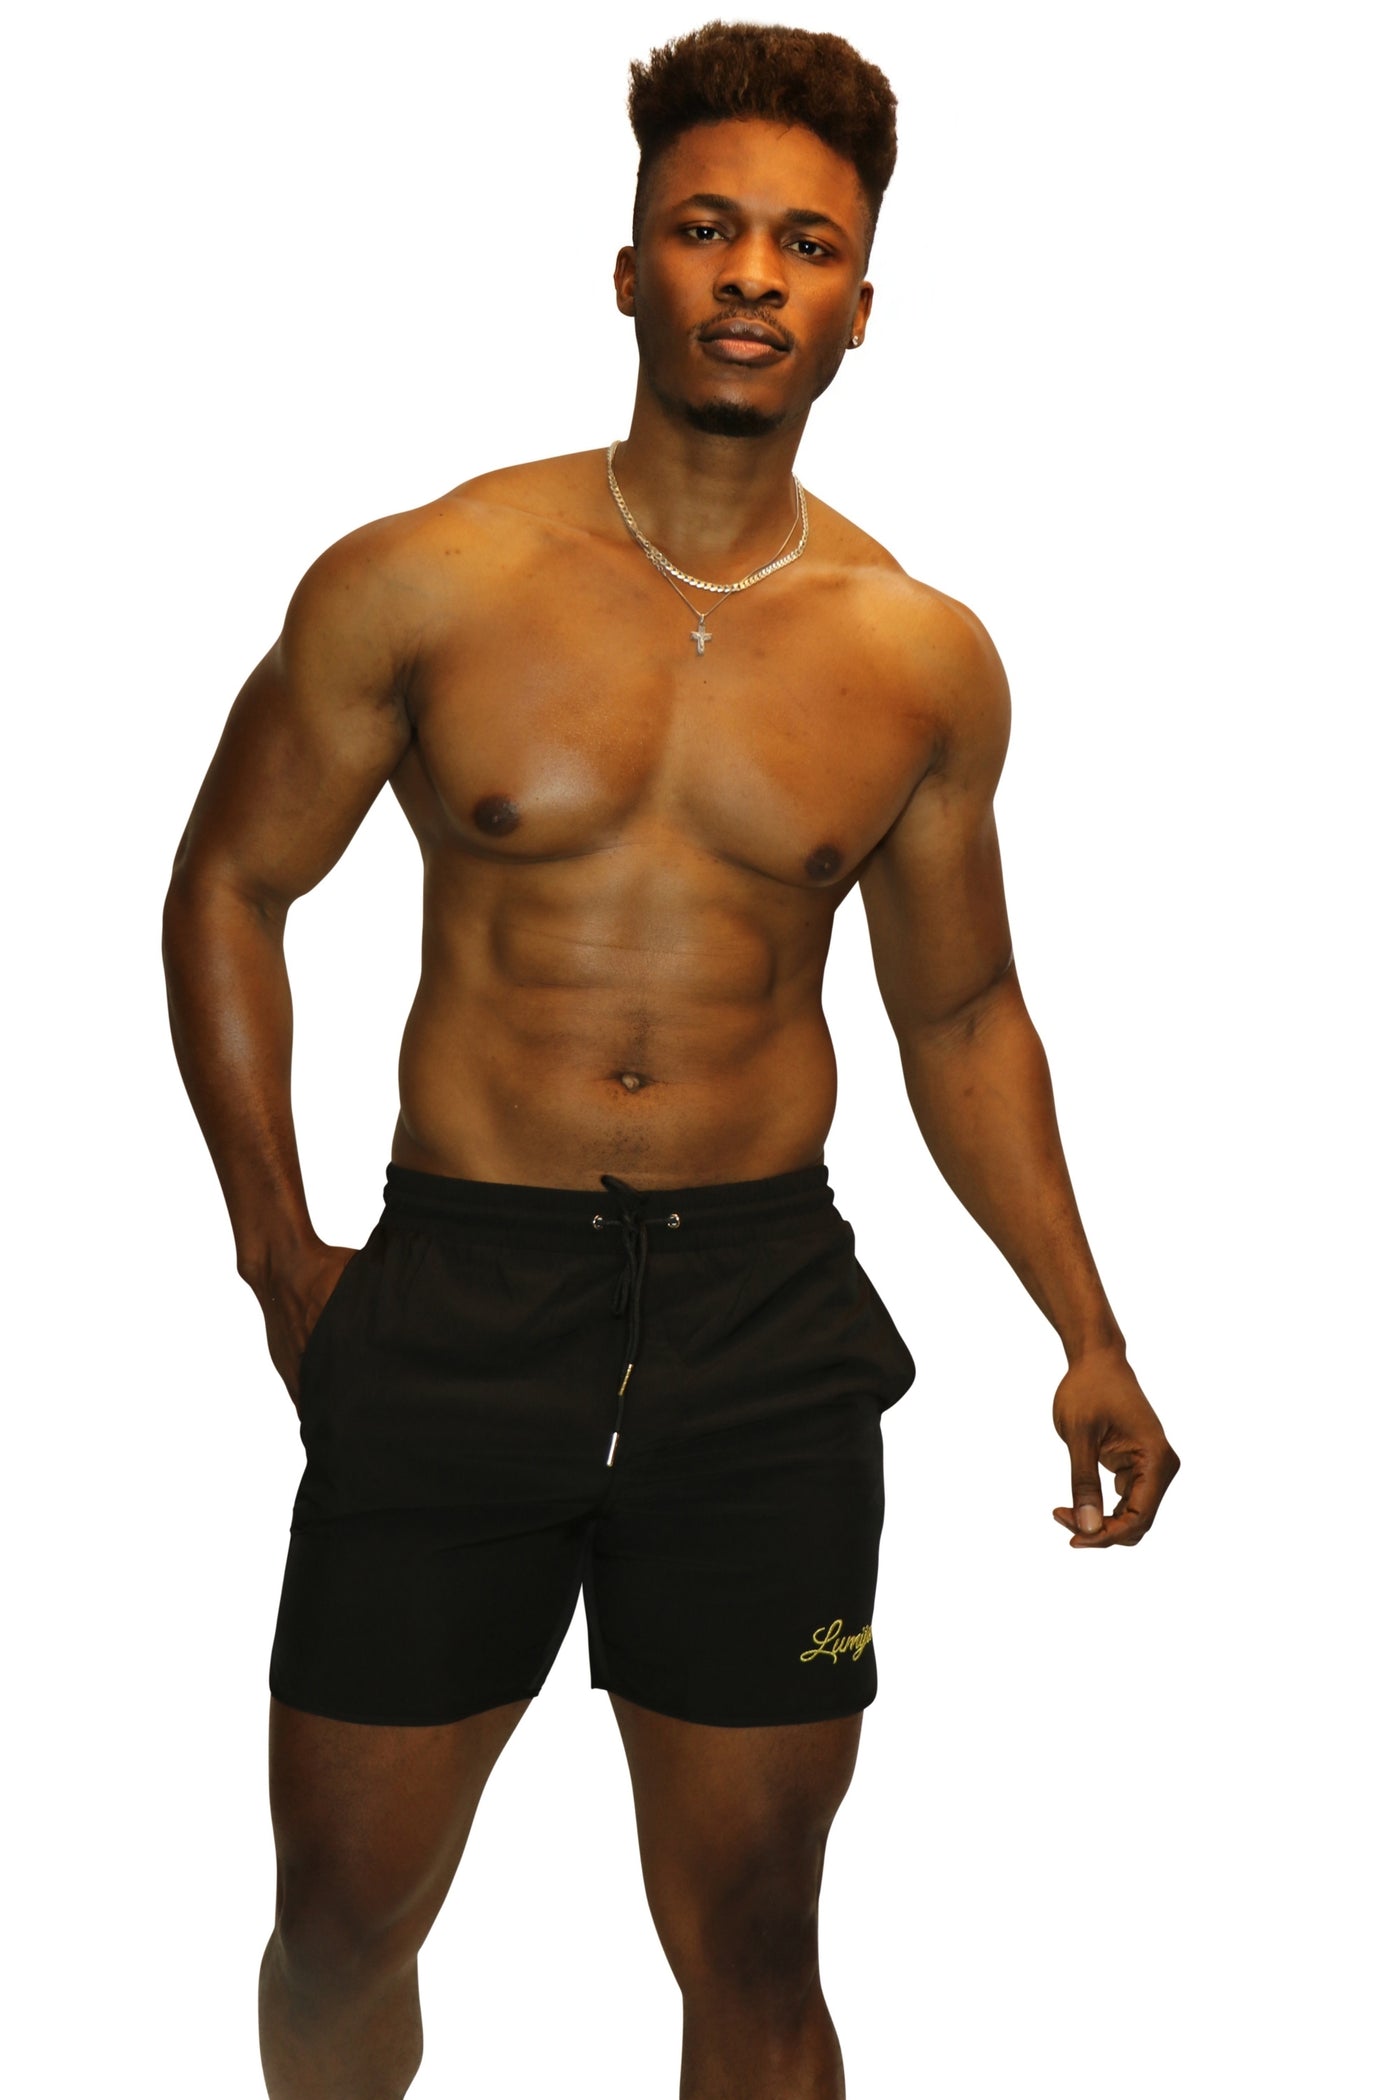 Alessandro Swim Shorts - Medium Length in Black